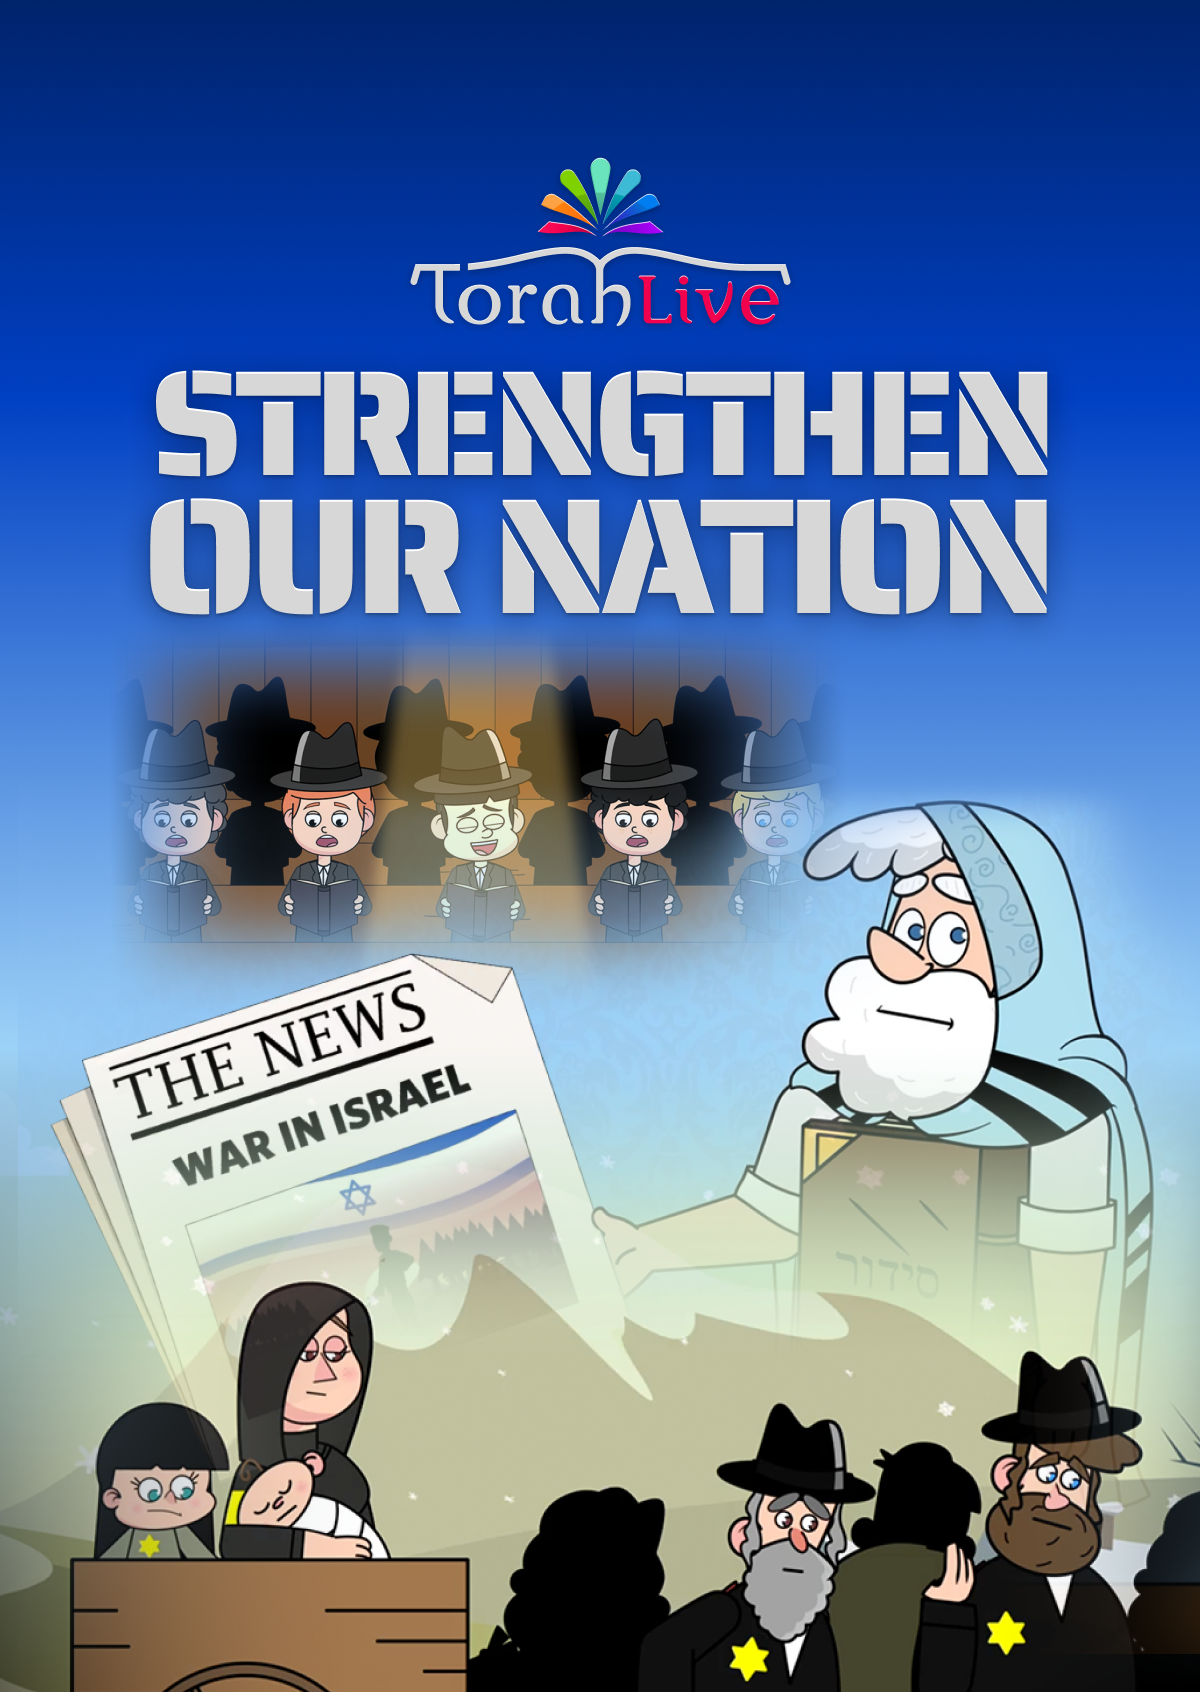 Torah Live - Strengthen Our Nation (Video)